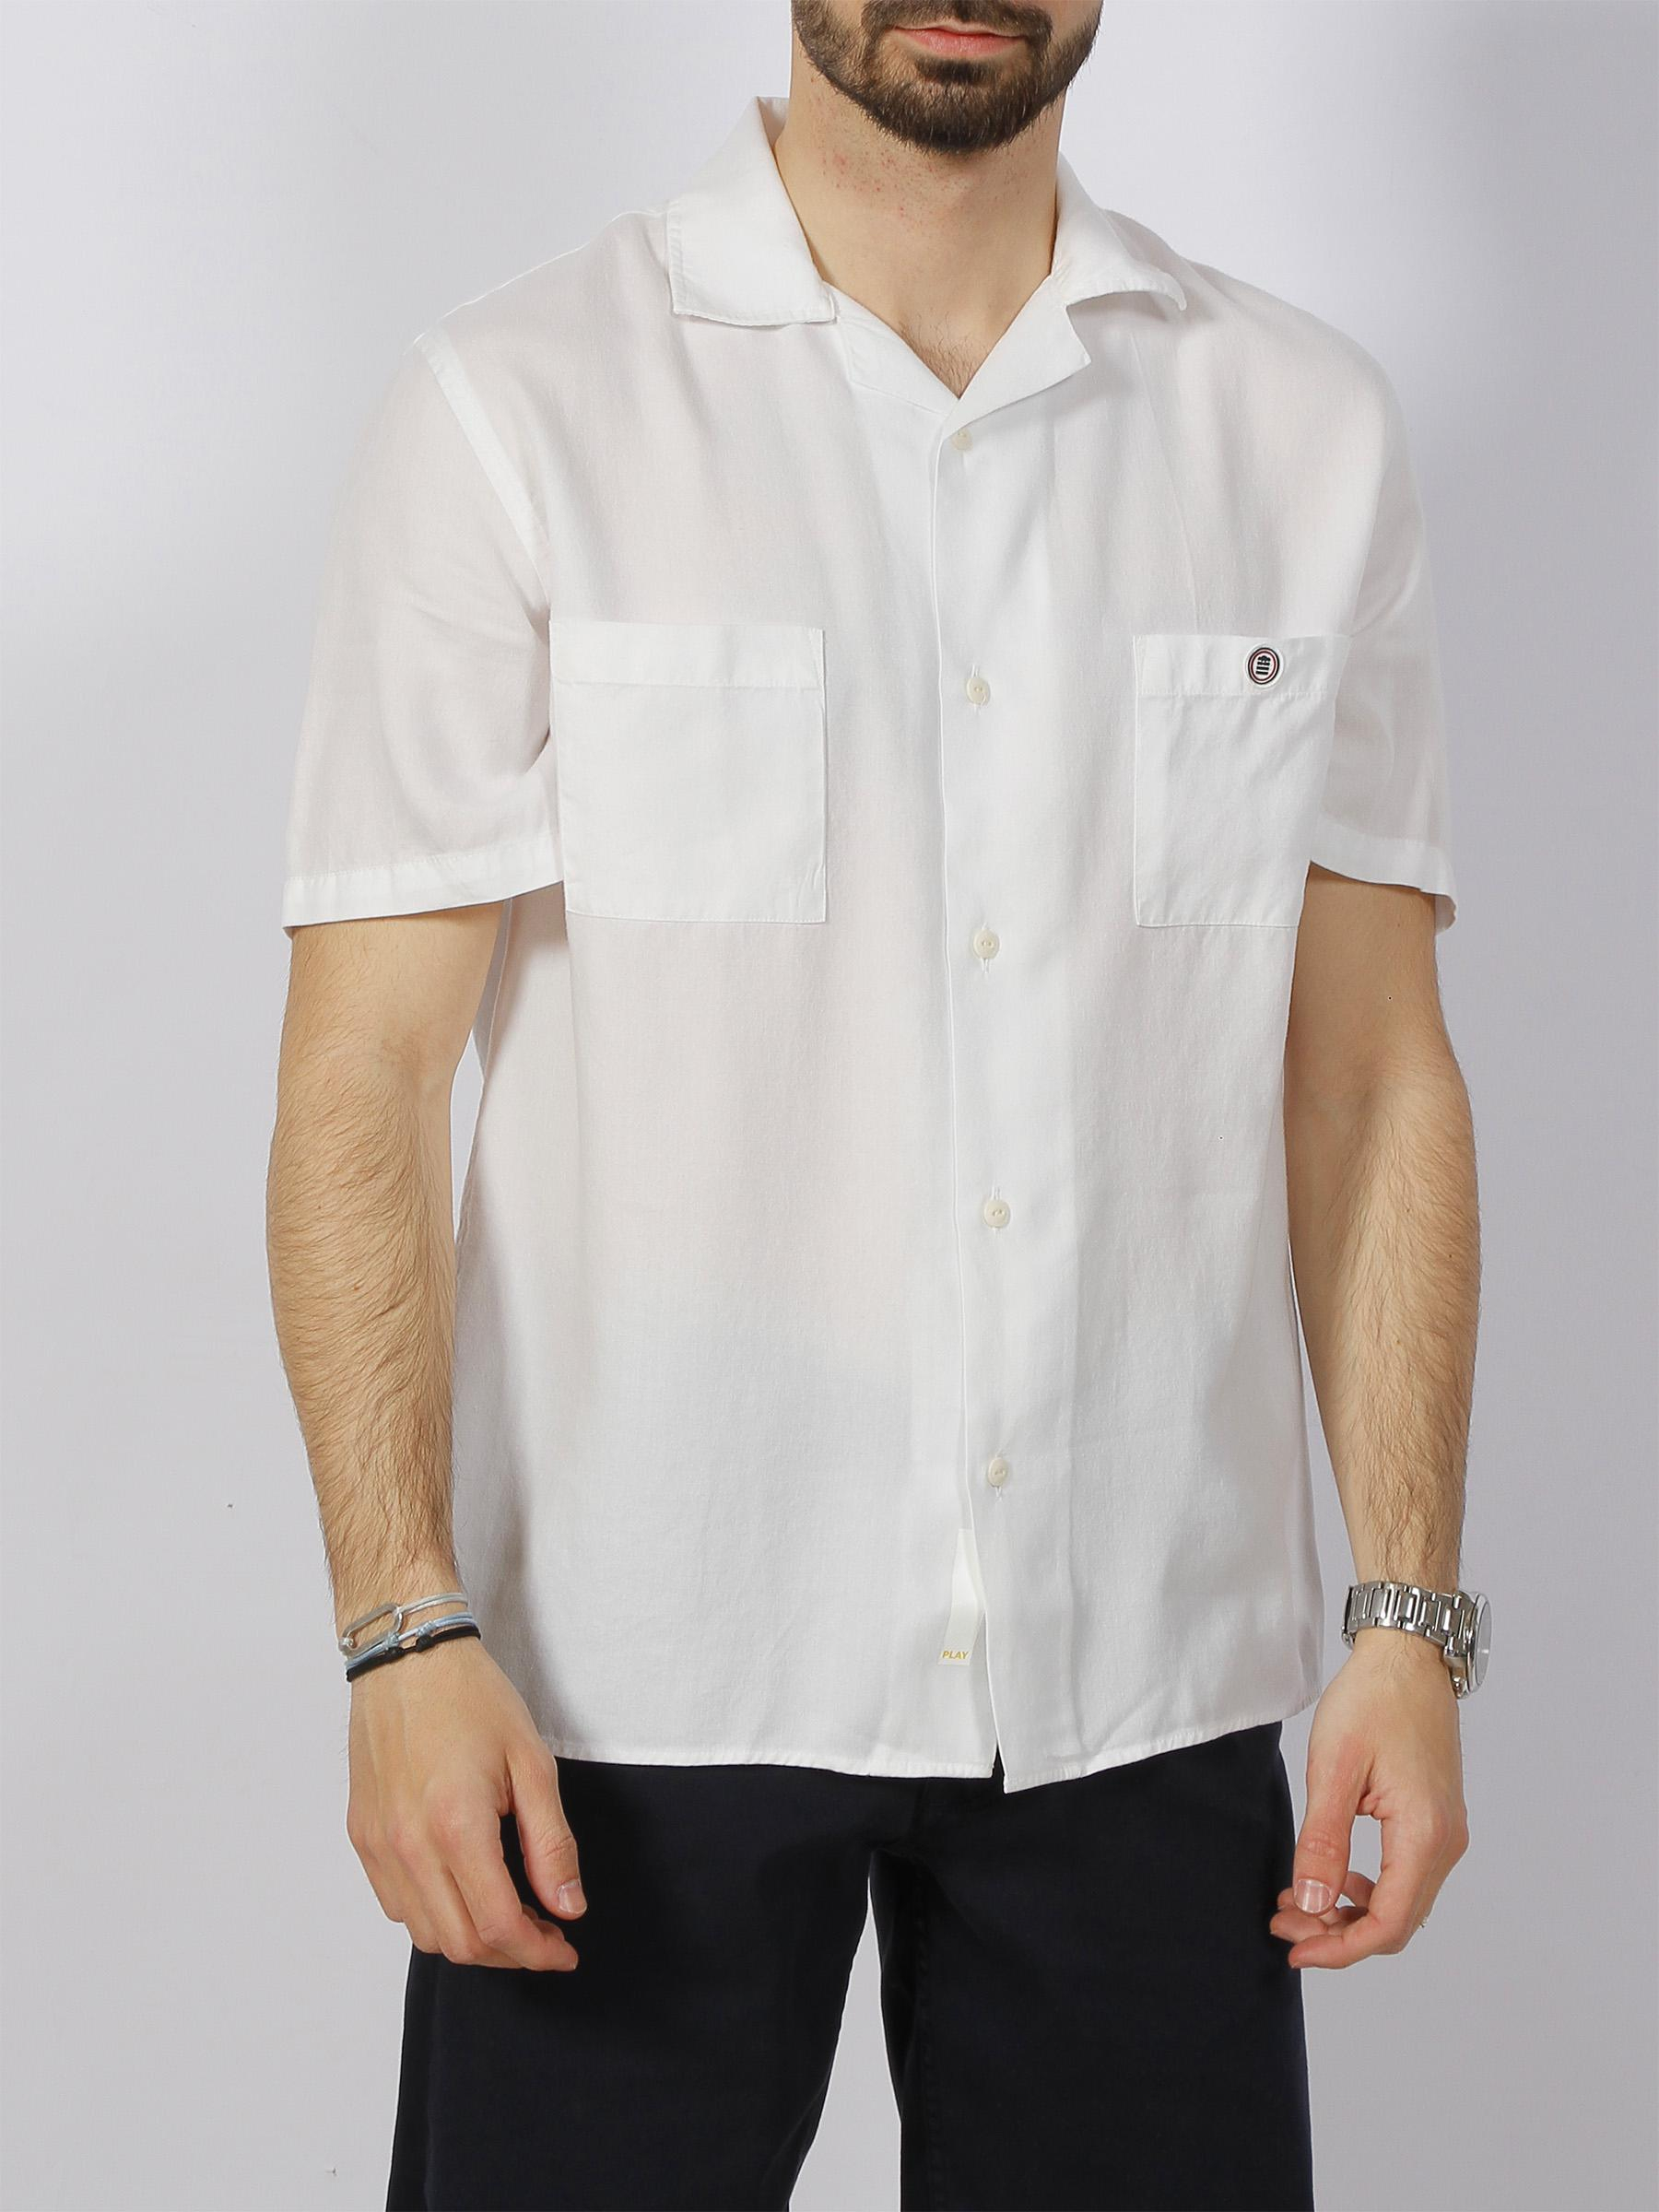 Chemise légère hawai blanc homme - Serge Blanco